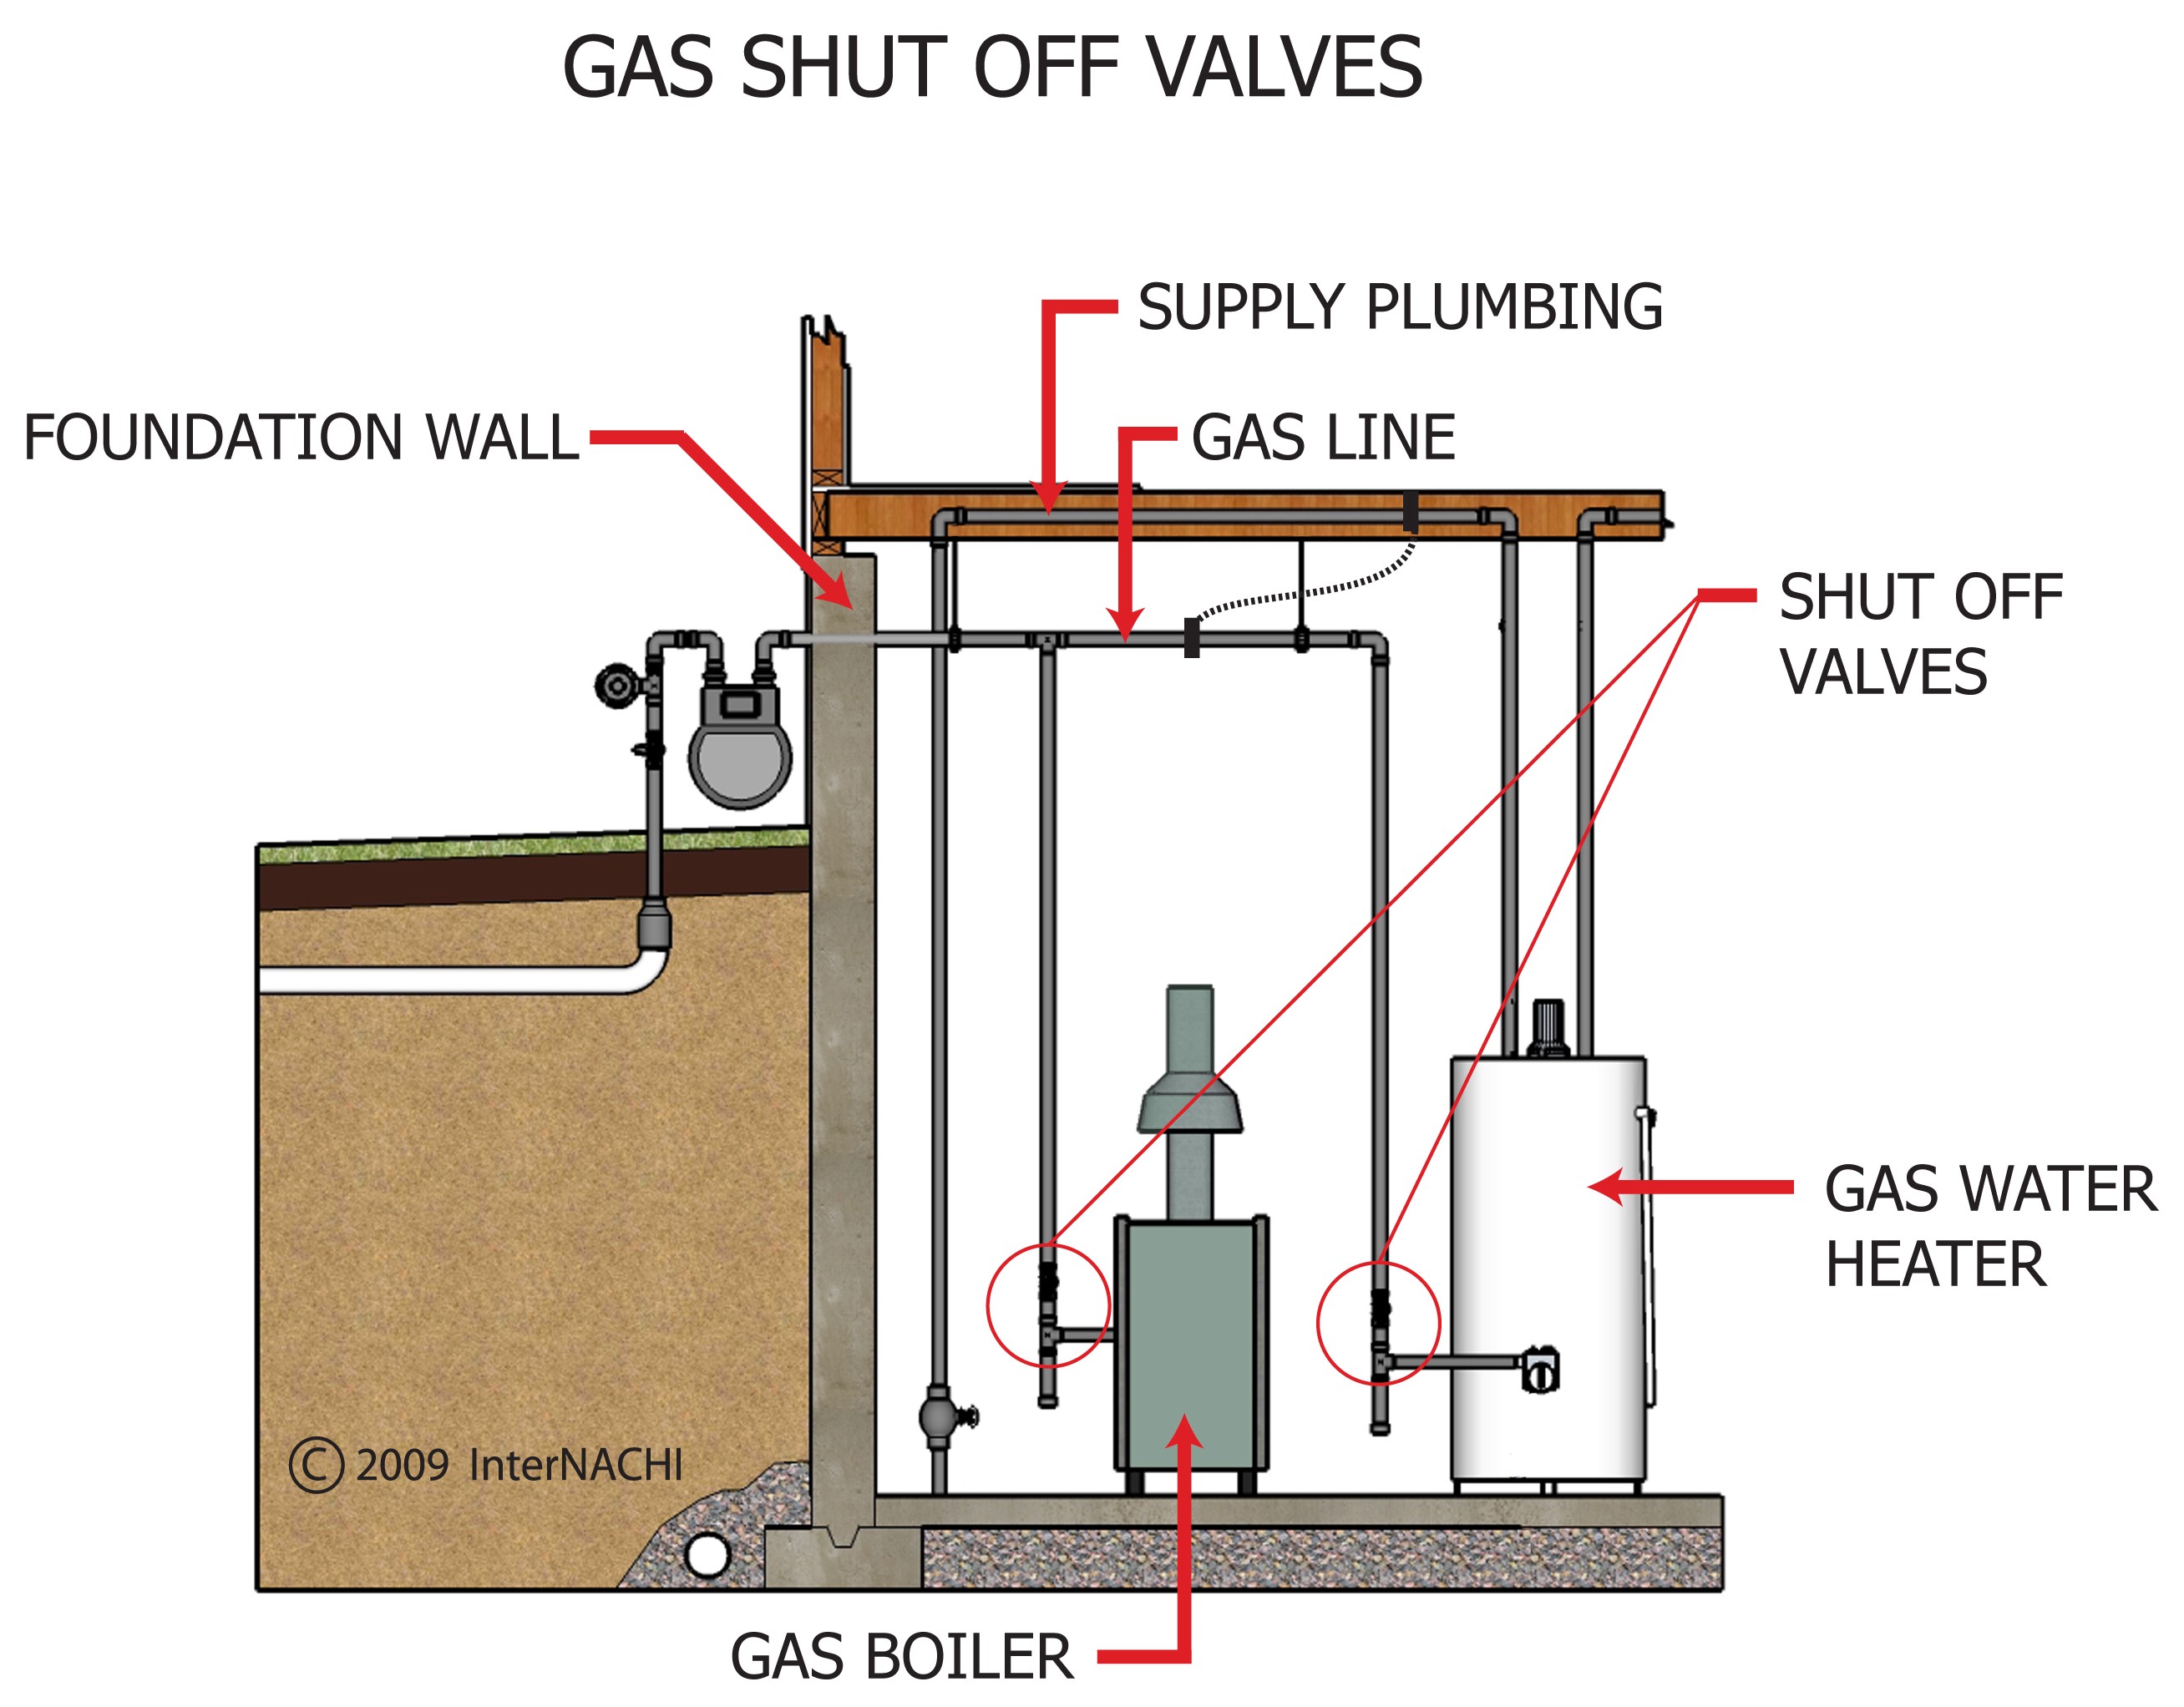 Gas shut off valves.